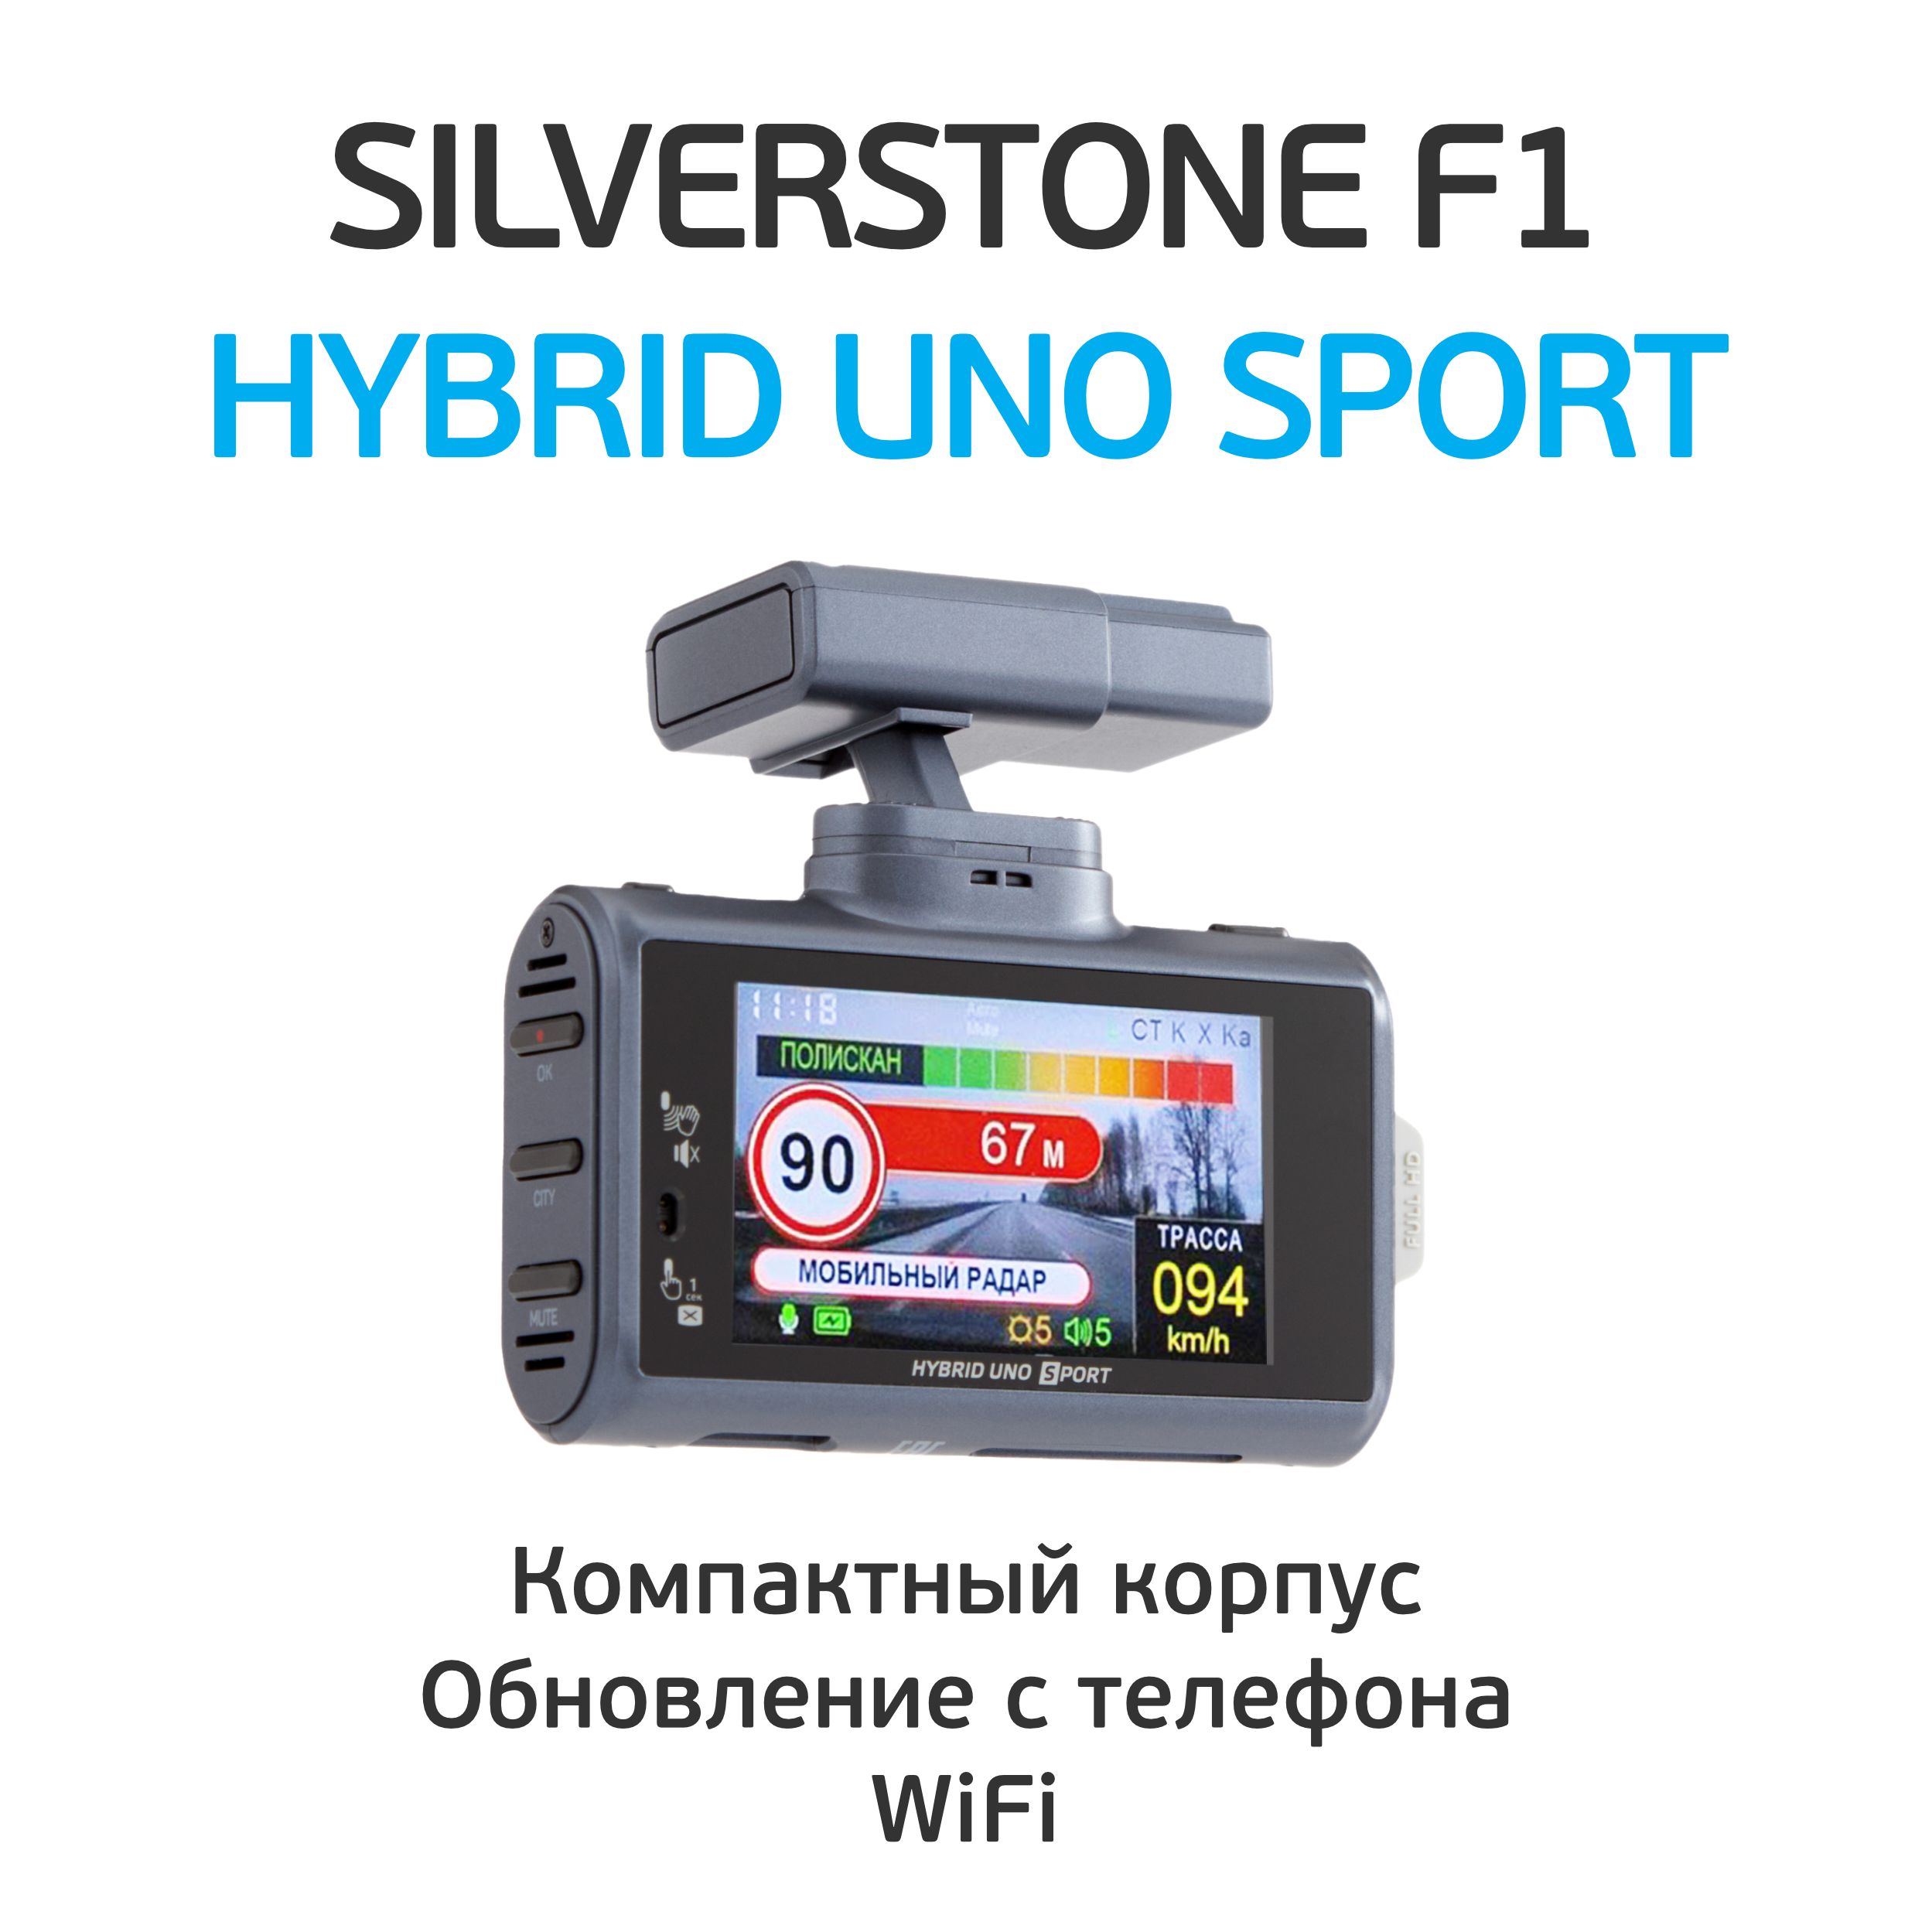 Гибрид уно спорт. Silverstone f1 Hybrid uno Sport обновление прошивки. Silverstone f1 Hybrid uno Sport Wi-Fi отзывы.